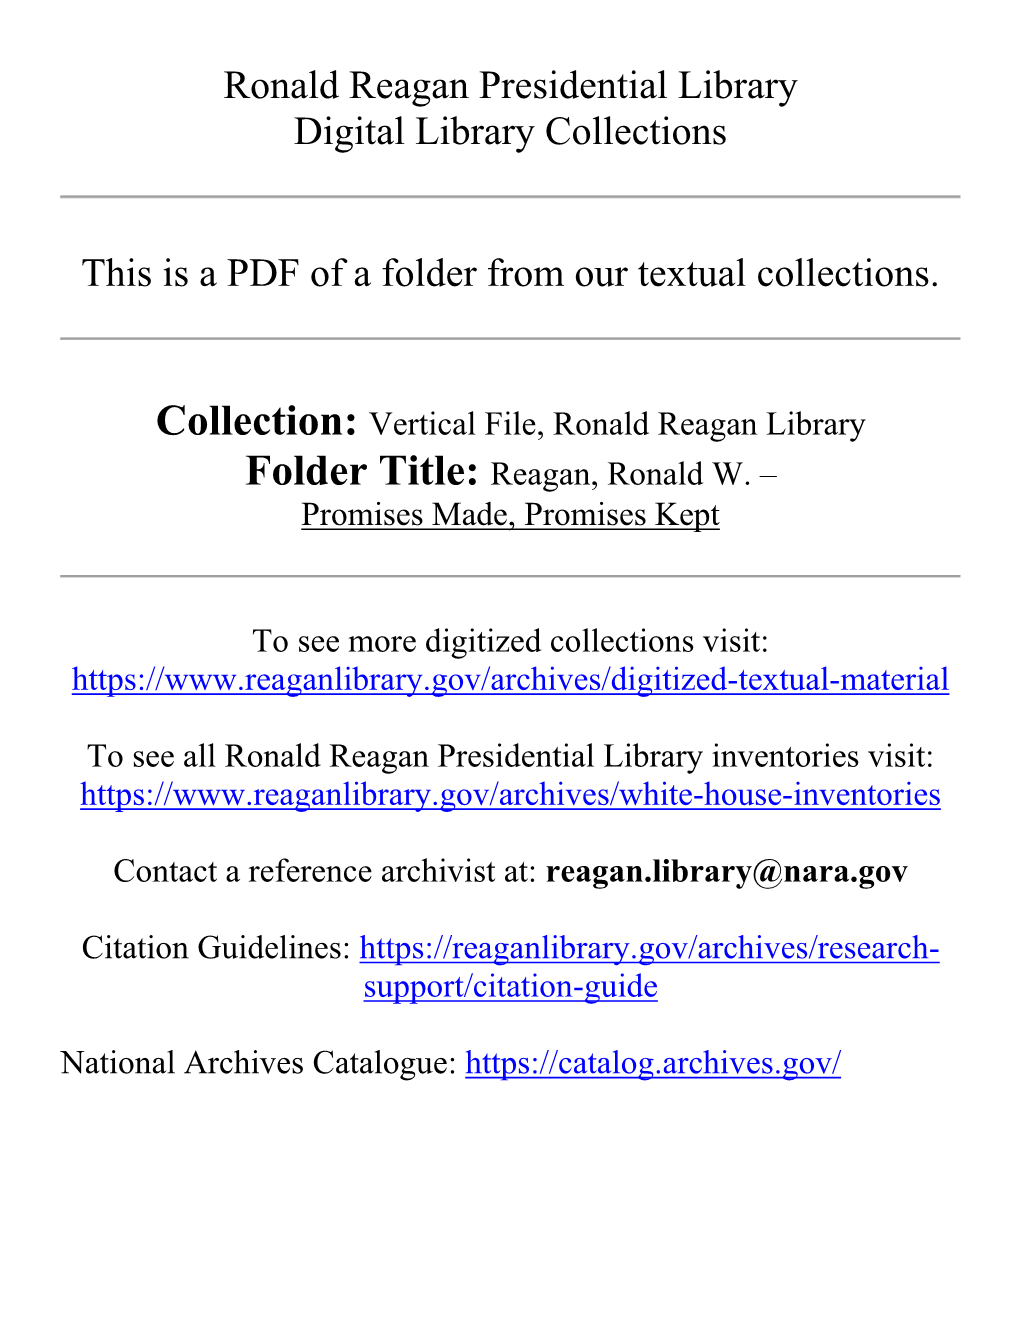 Collection: Vertical File, Ronald Reagan Library Folder Title: Reagan, Ronald W